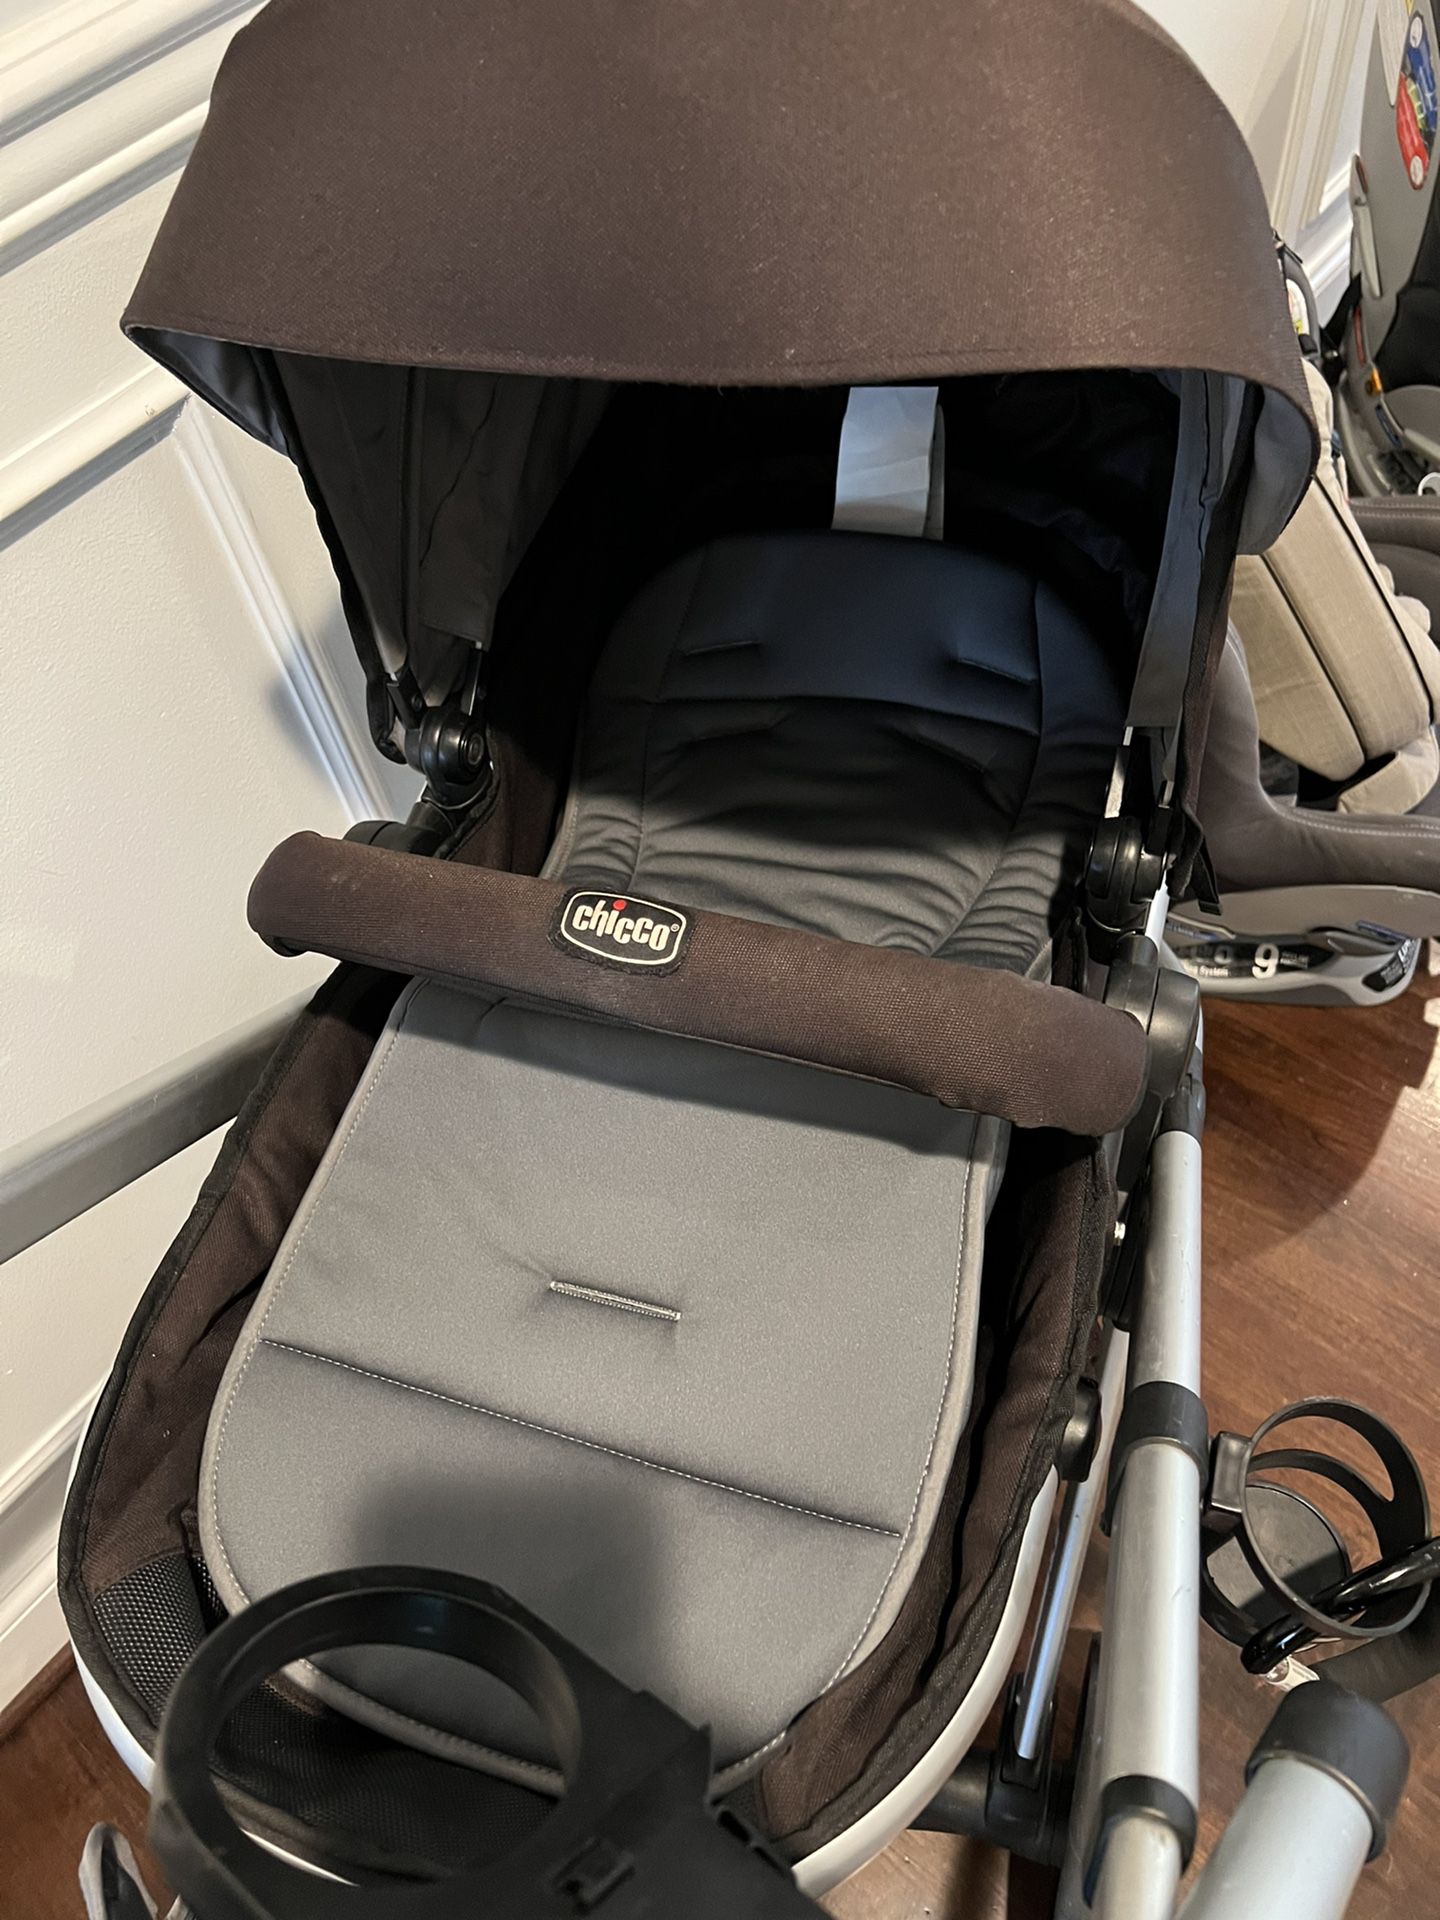 Chicco Urban stroller/bassinet